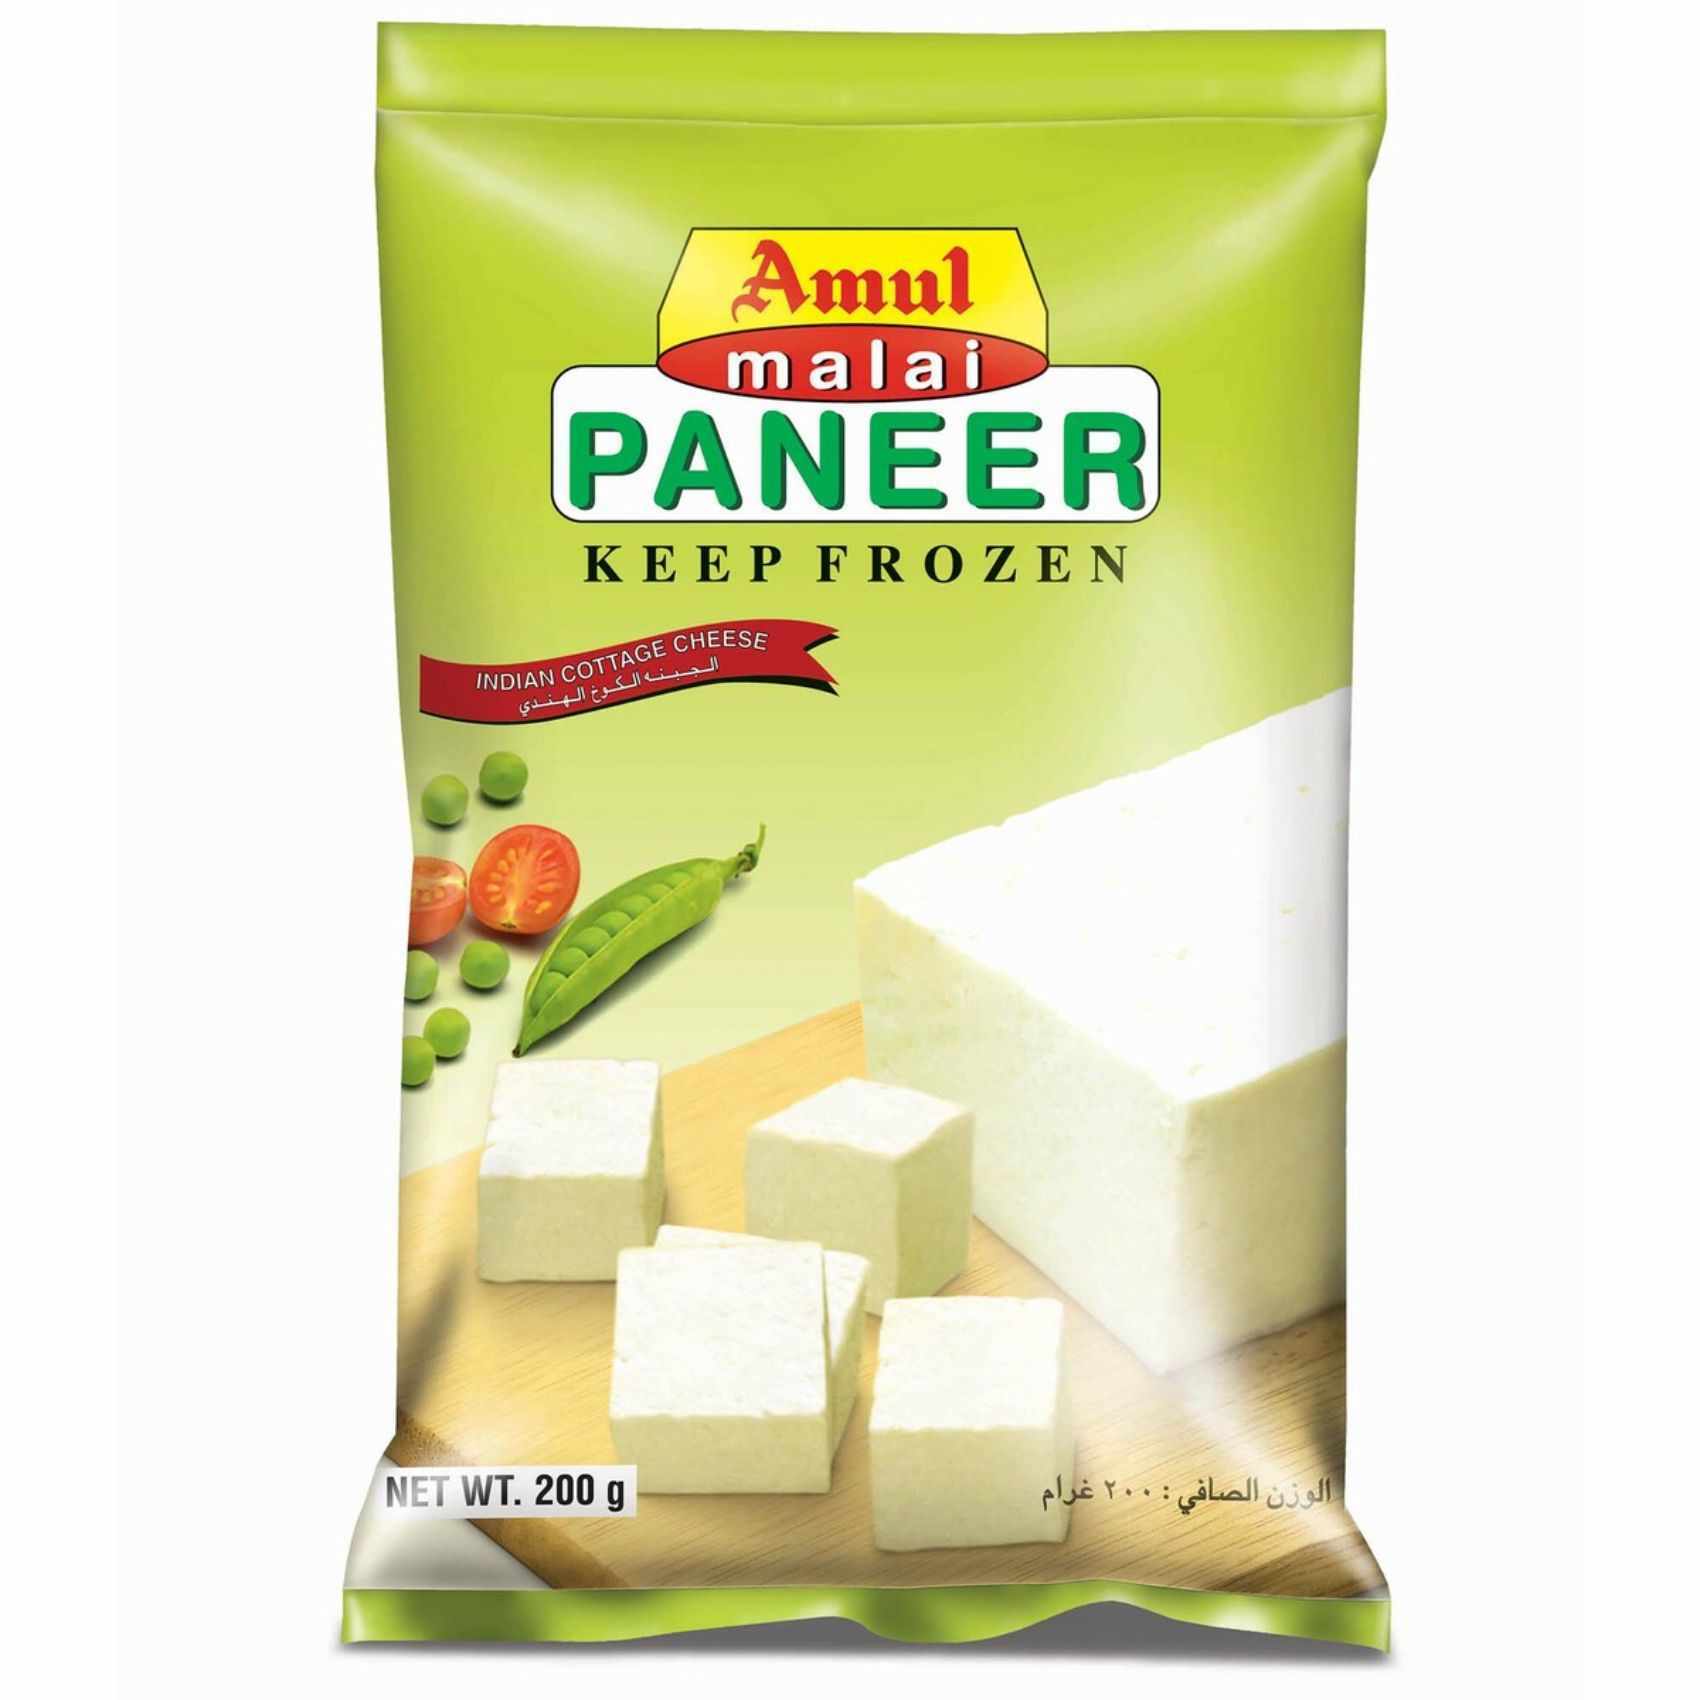 Buy Amul Malai Paneer 0g Online Shop Frozen Food On Carrefour Uae